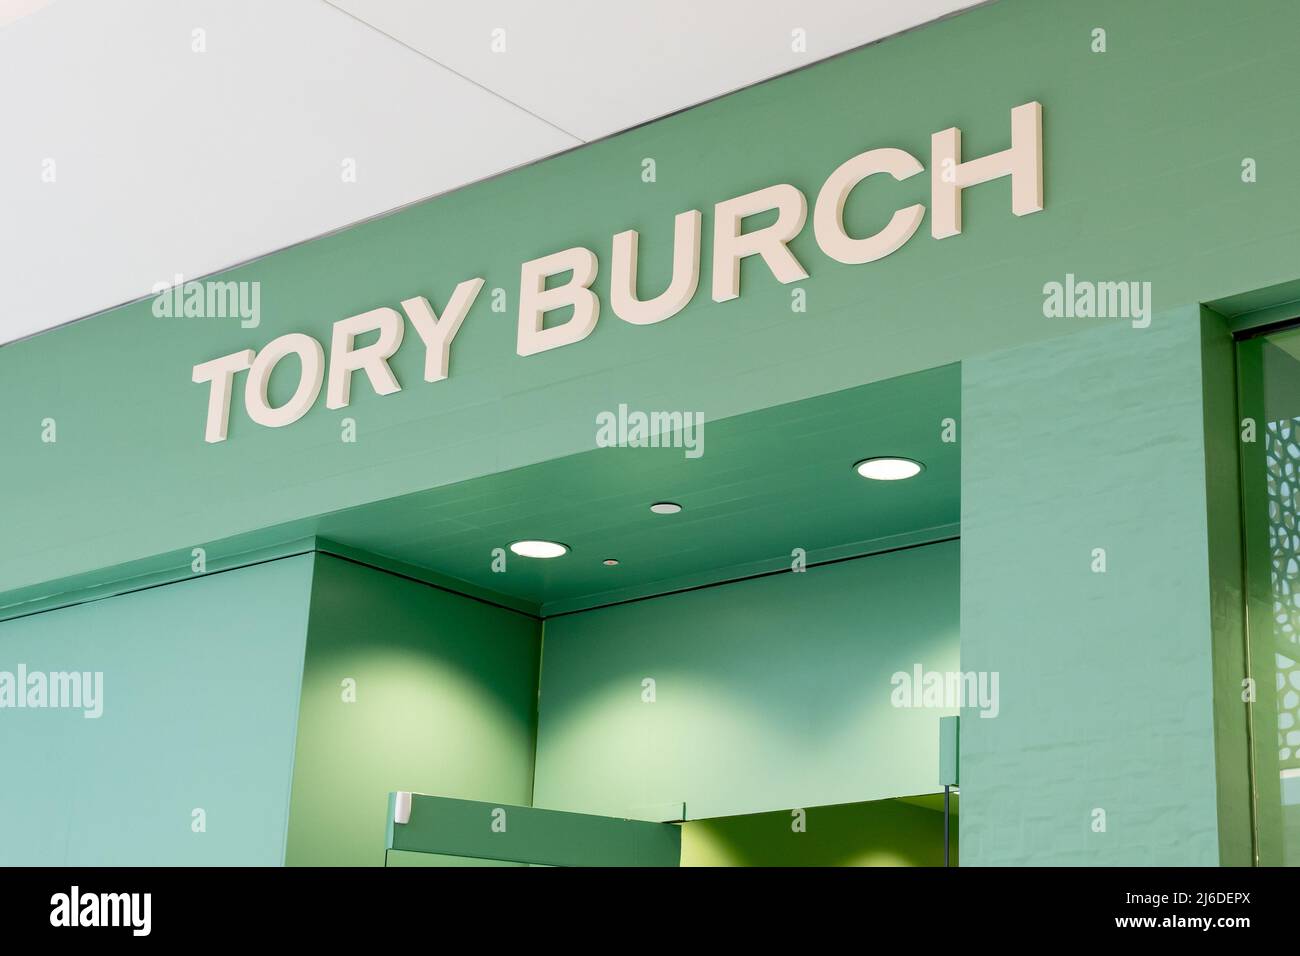 Tory Burch Houston Galleria in Houston, 58